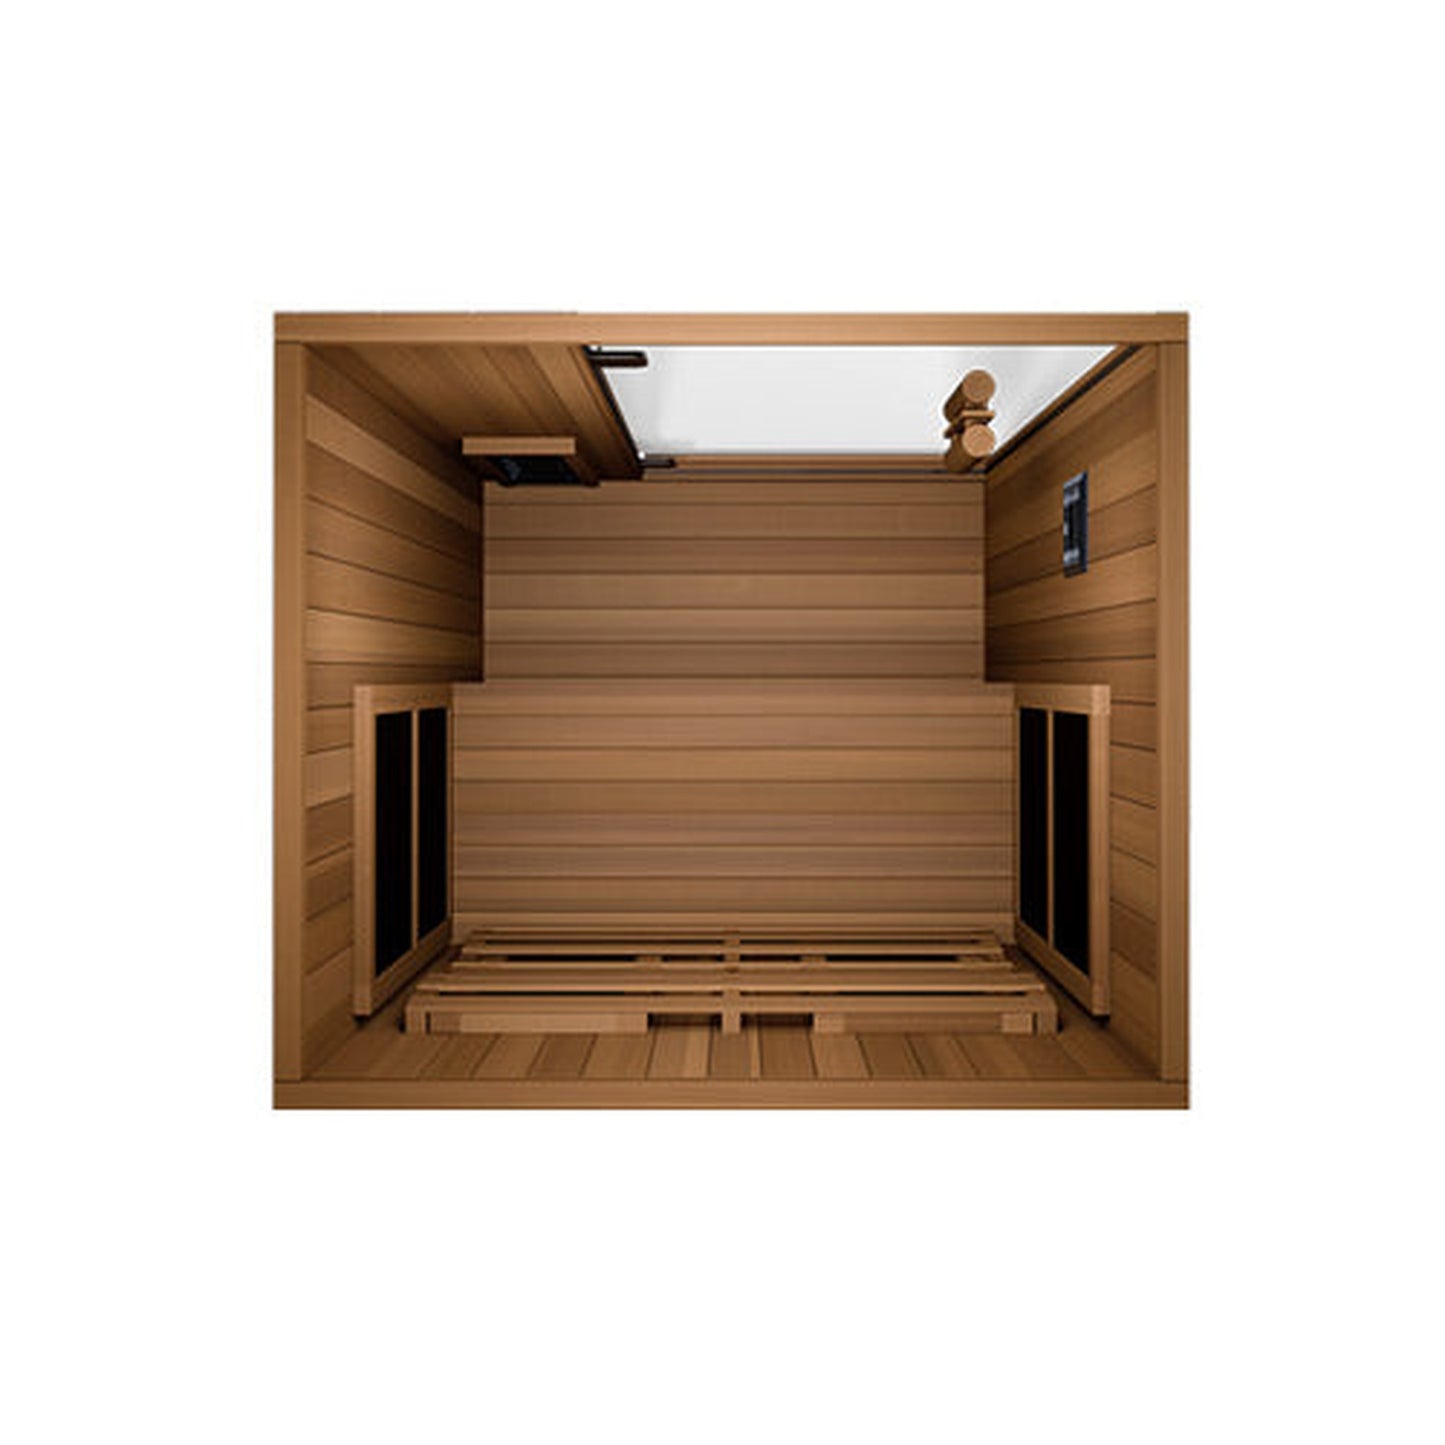 Finnmark Designs FD-1 Full Spectrum 38" 1-Person Home Infrared Sauna